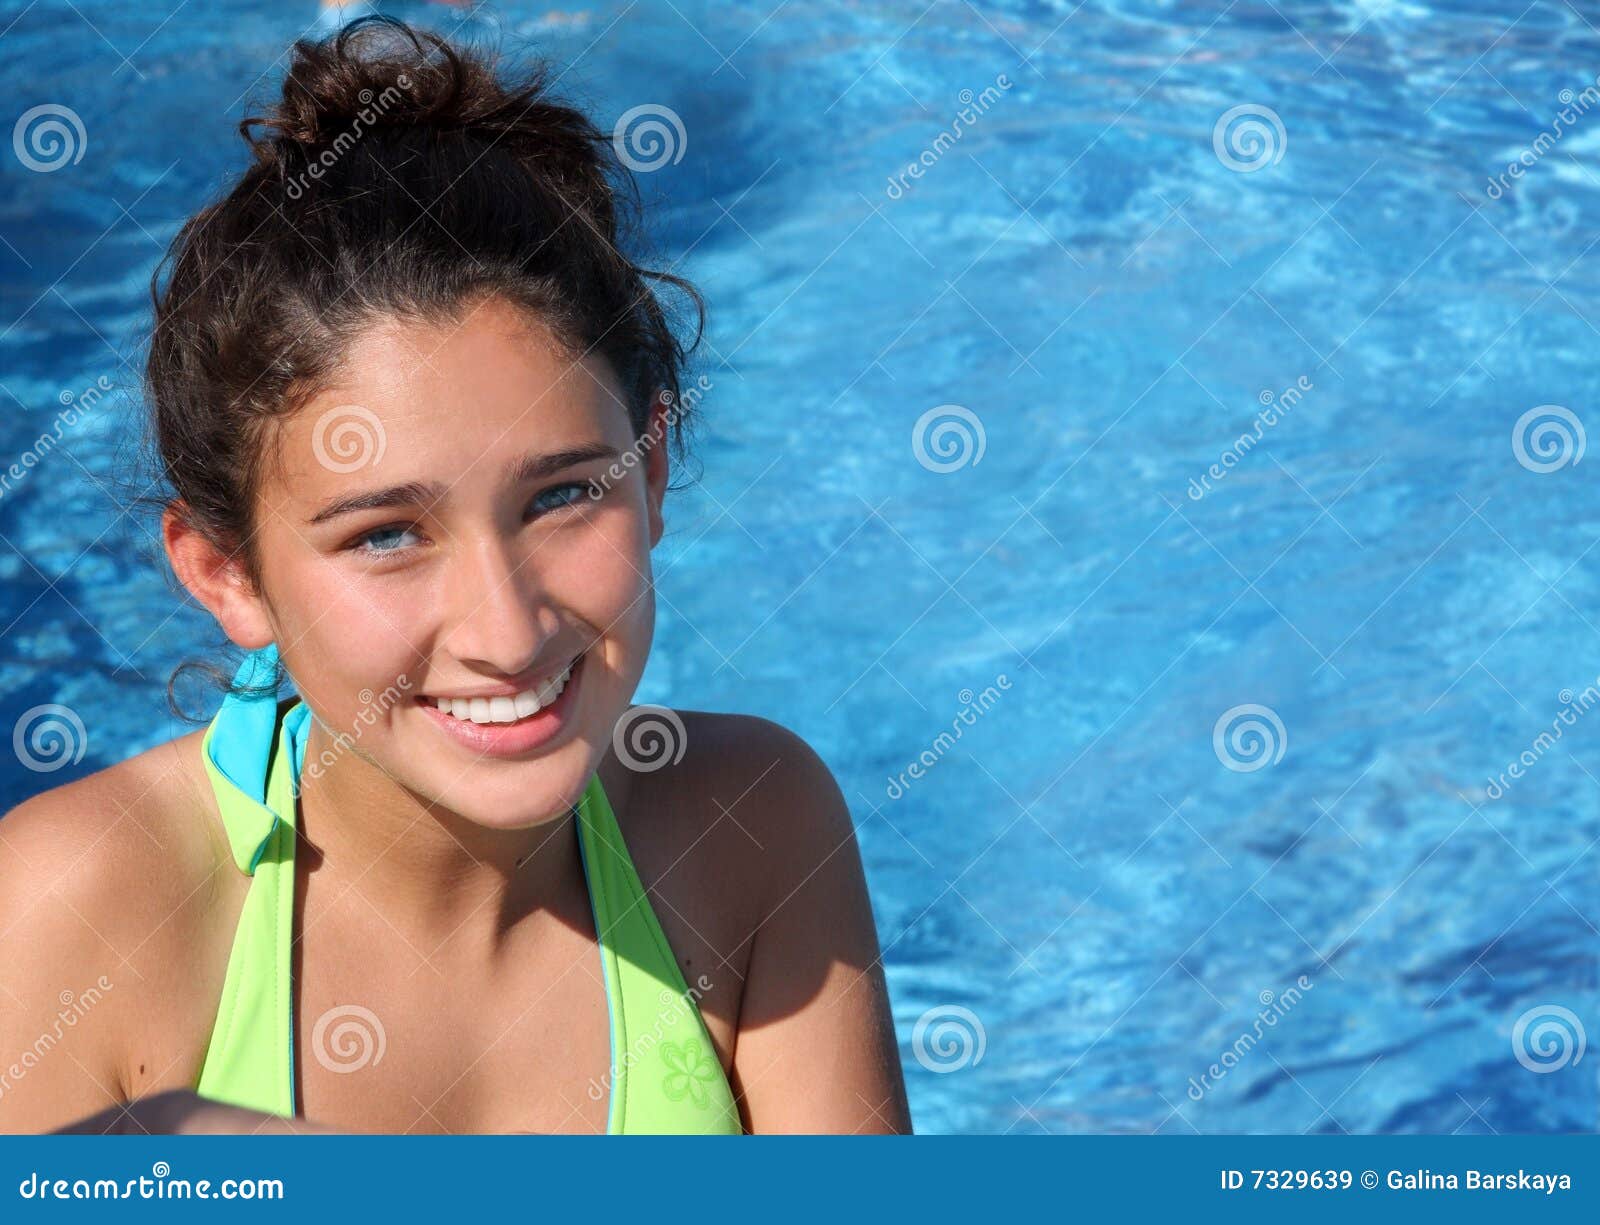 1,001 Teen Girl Swimmer Stock Photos - Free & Royalty-Free Stock